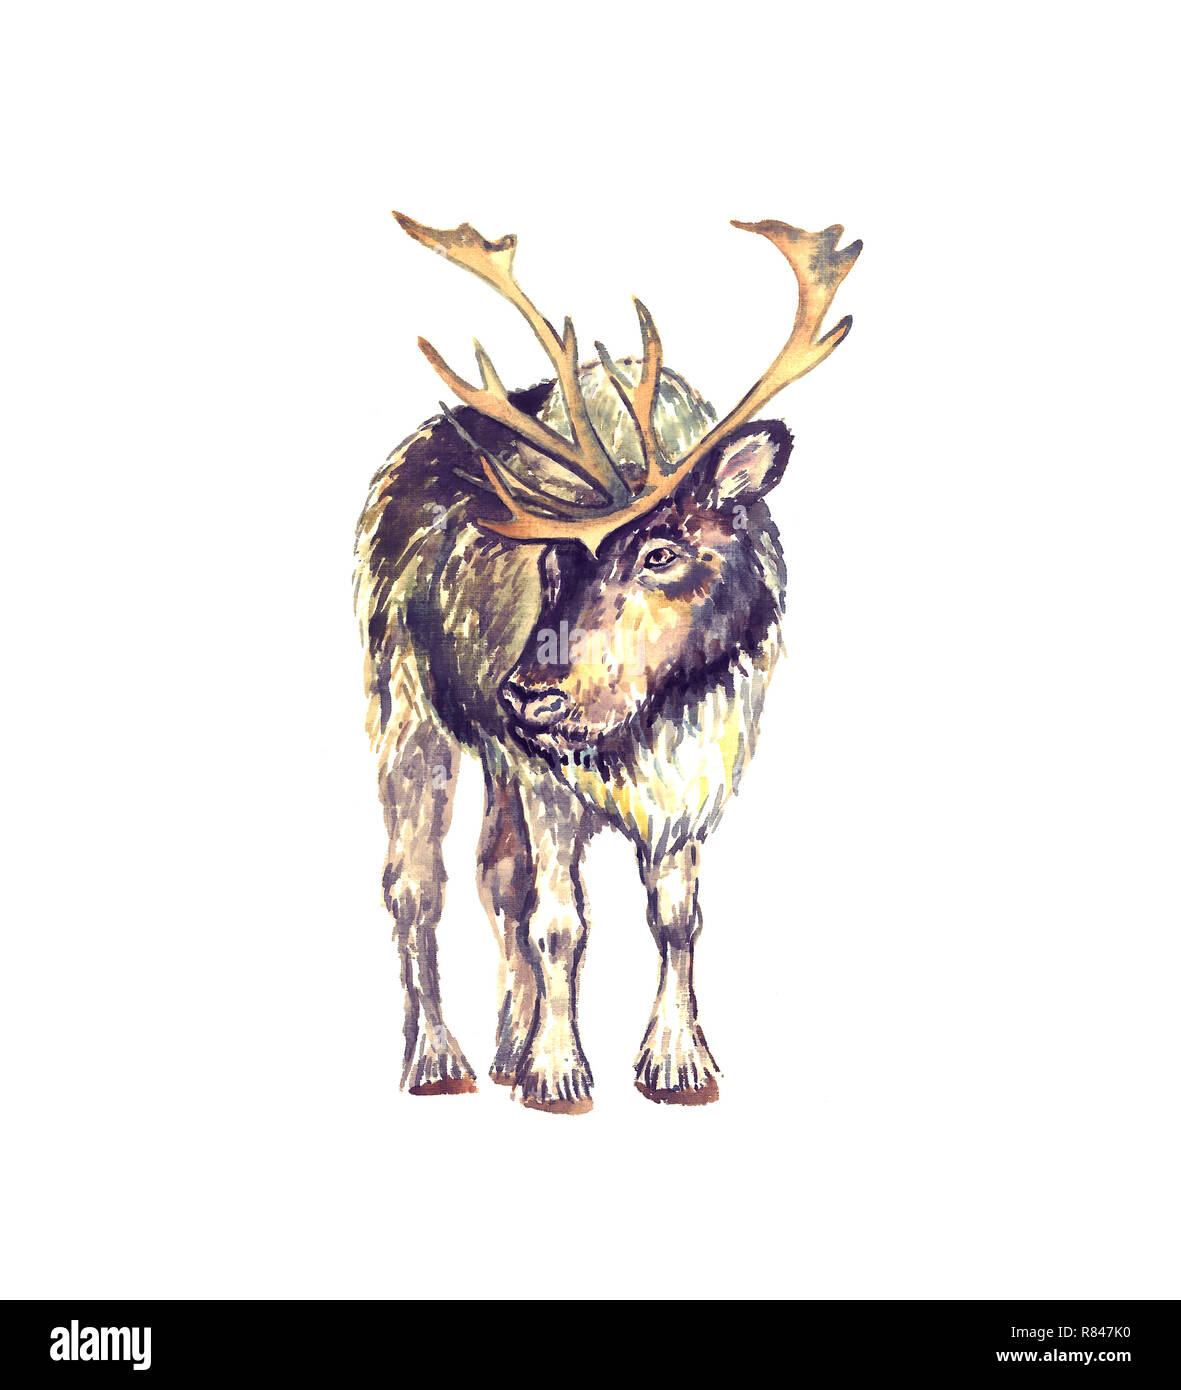 Deer Art Images  Free Download on Freepik